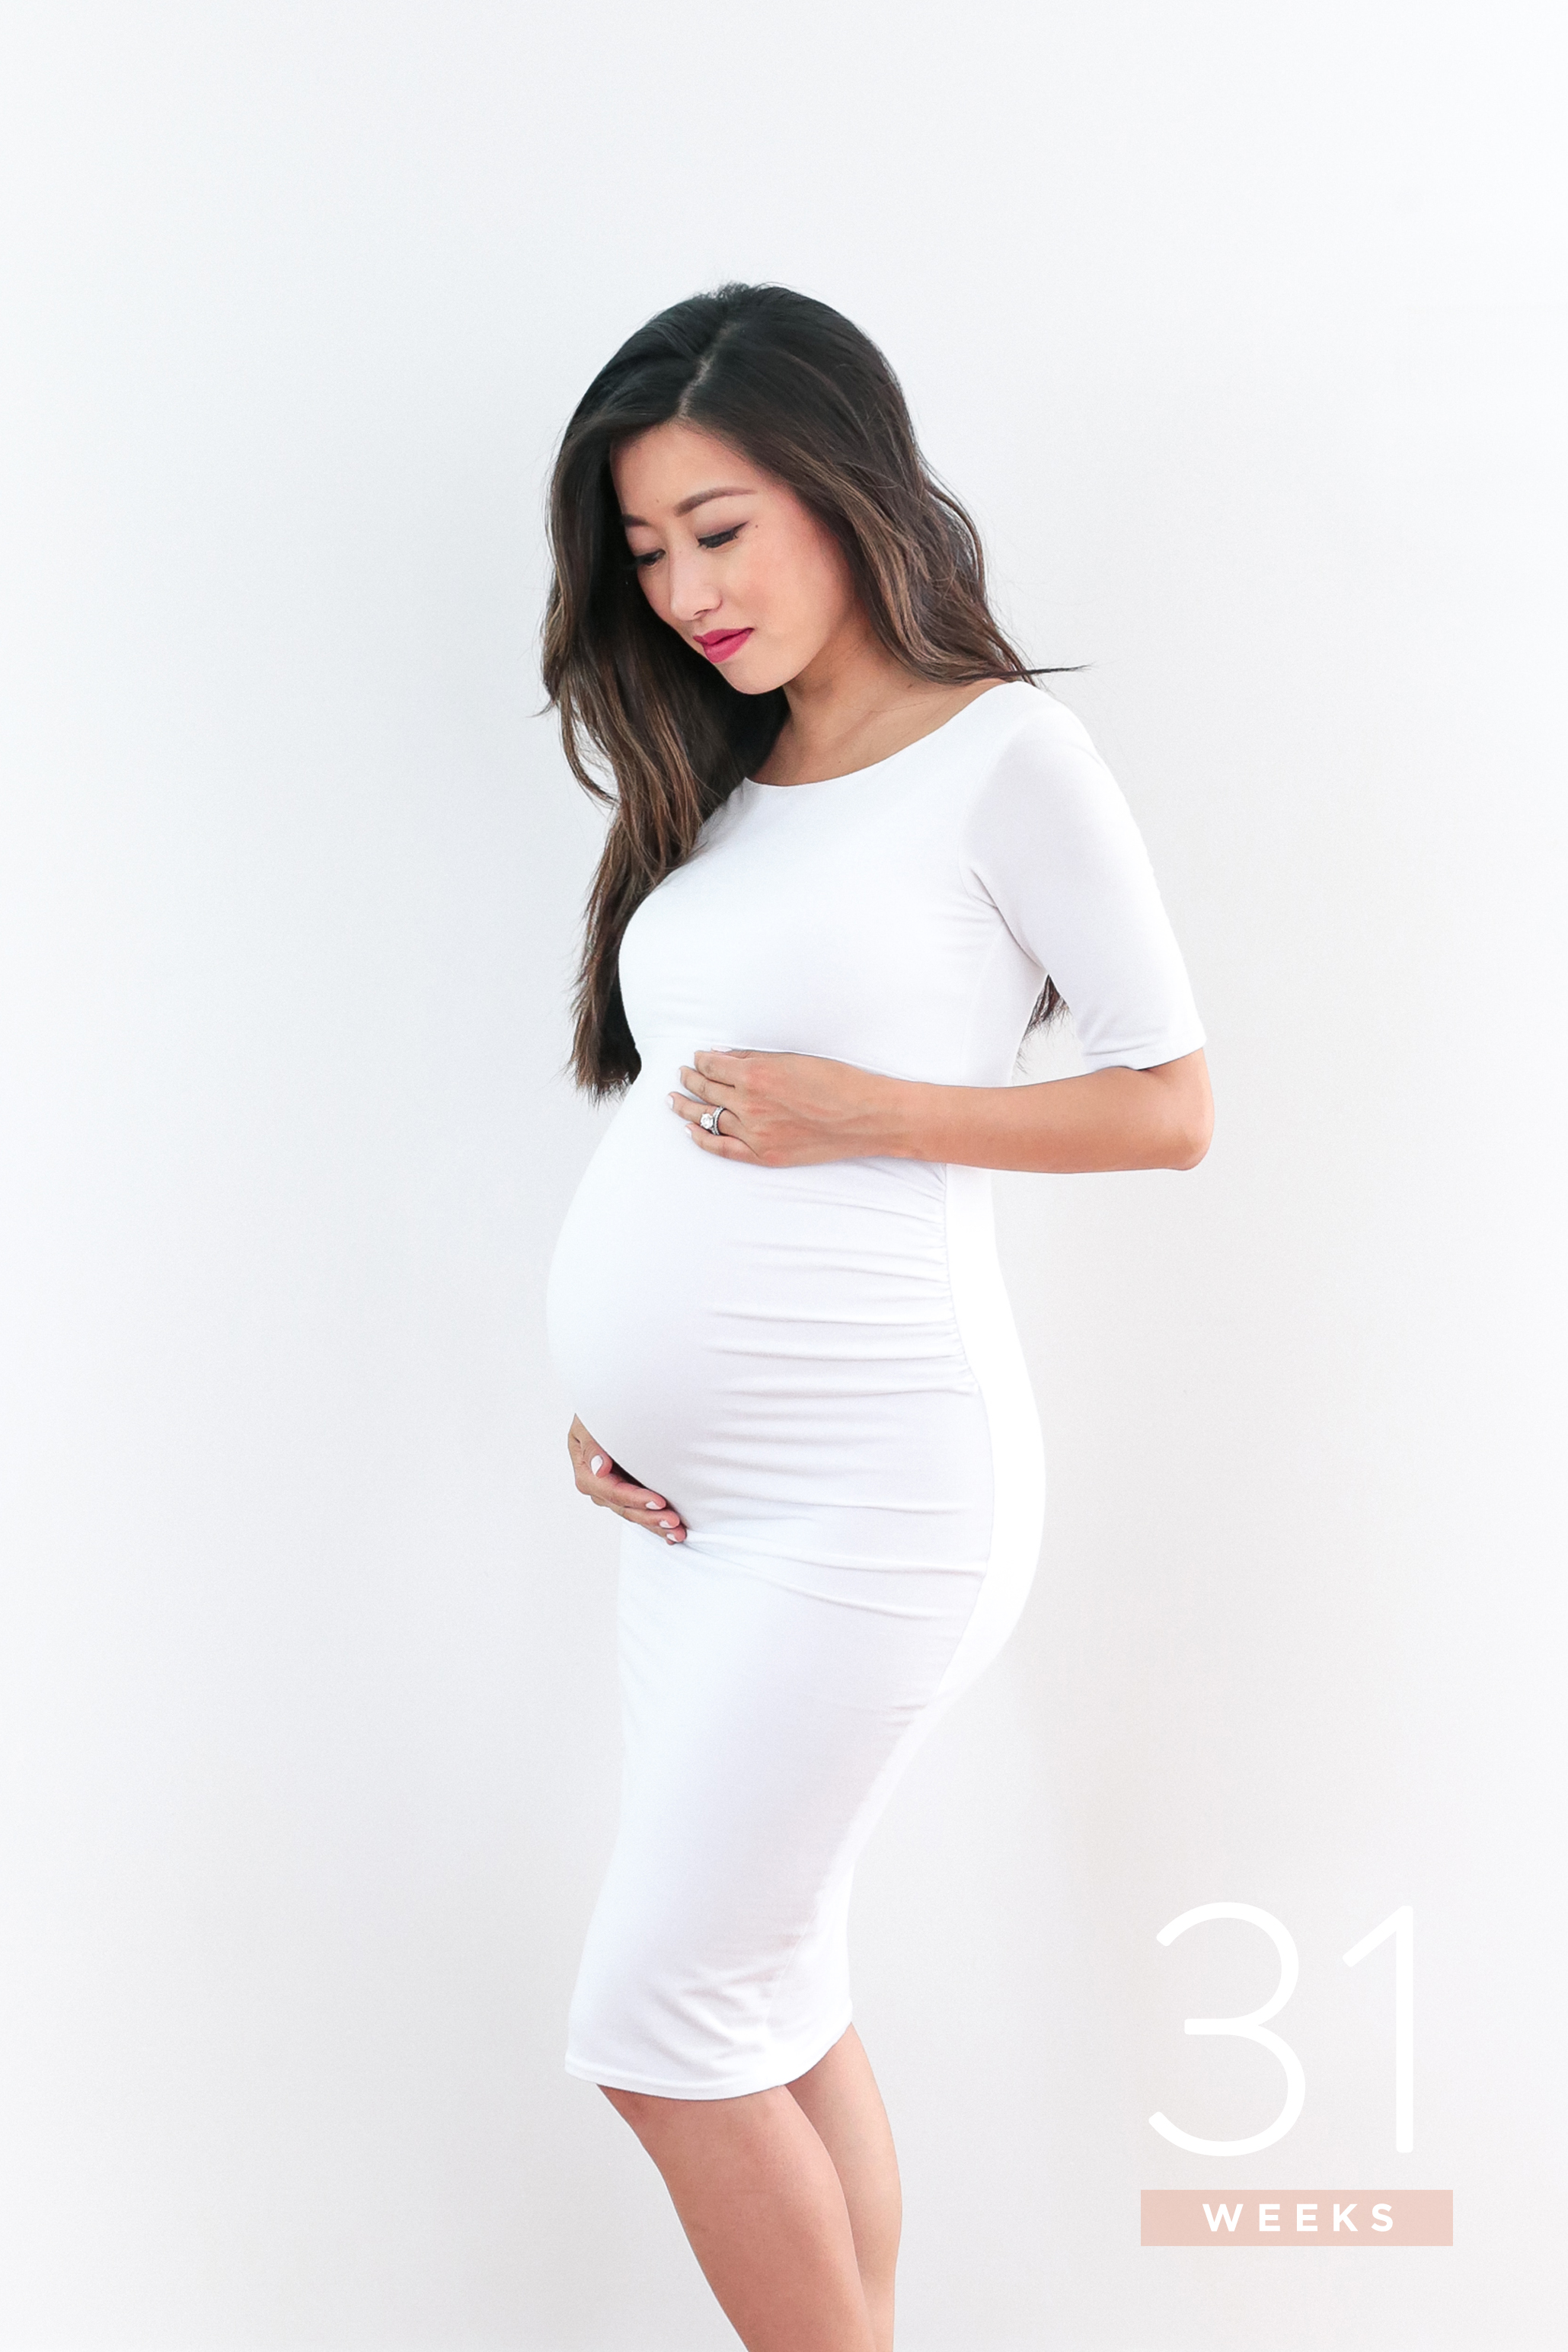 pregnant bump progress photos third trimester 31 weeks